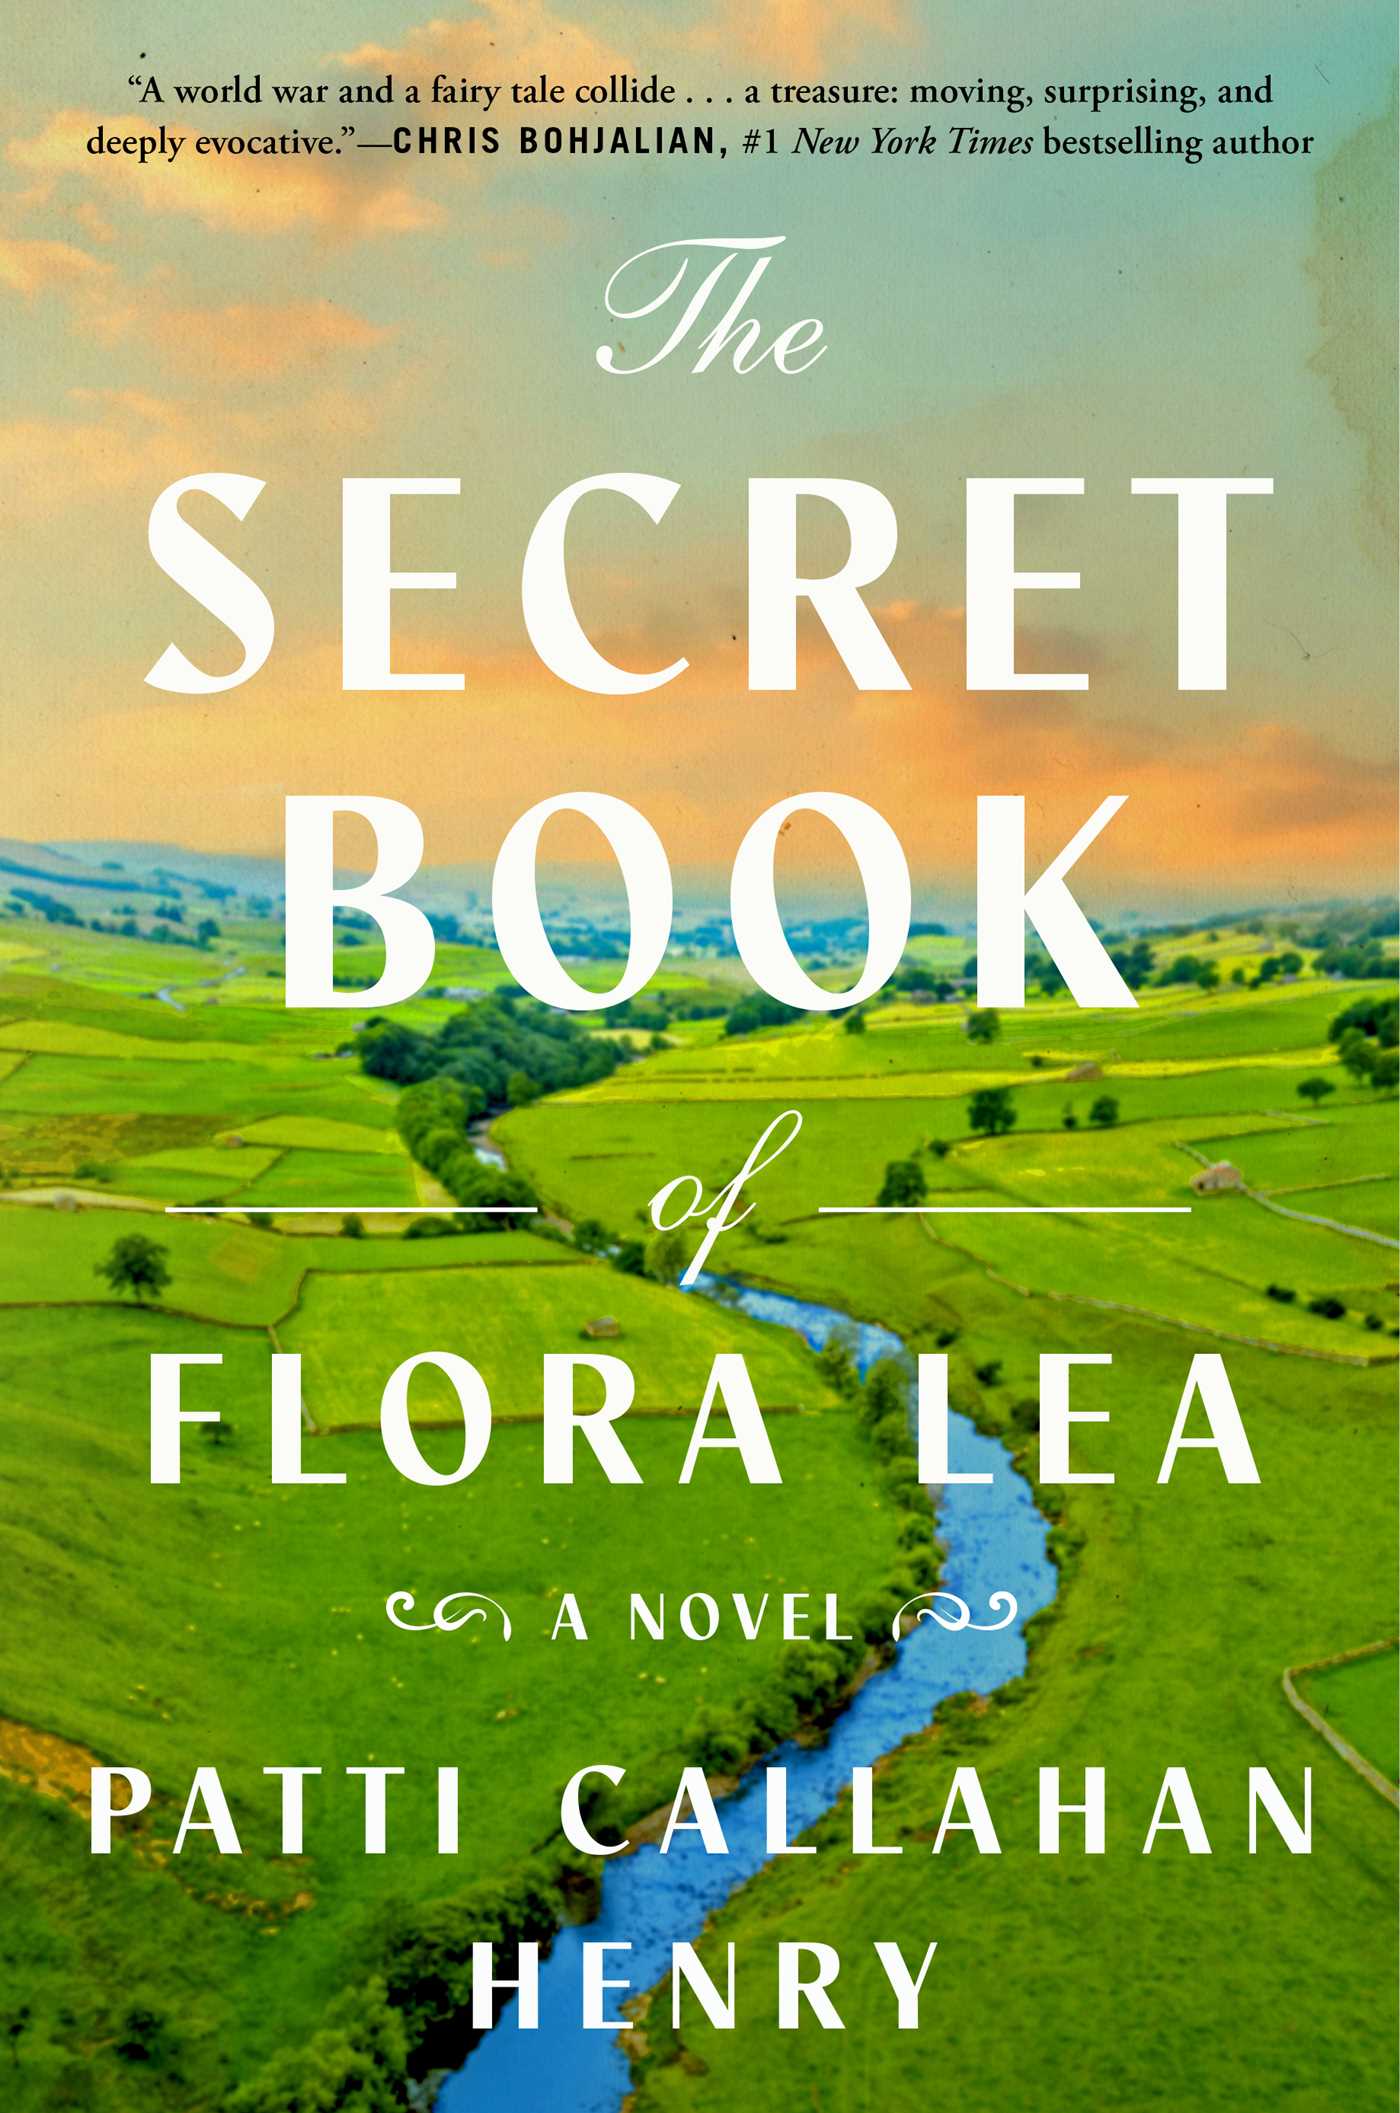 Image for "The Secret Book of Flora Lea"